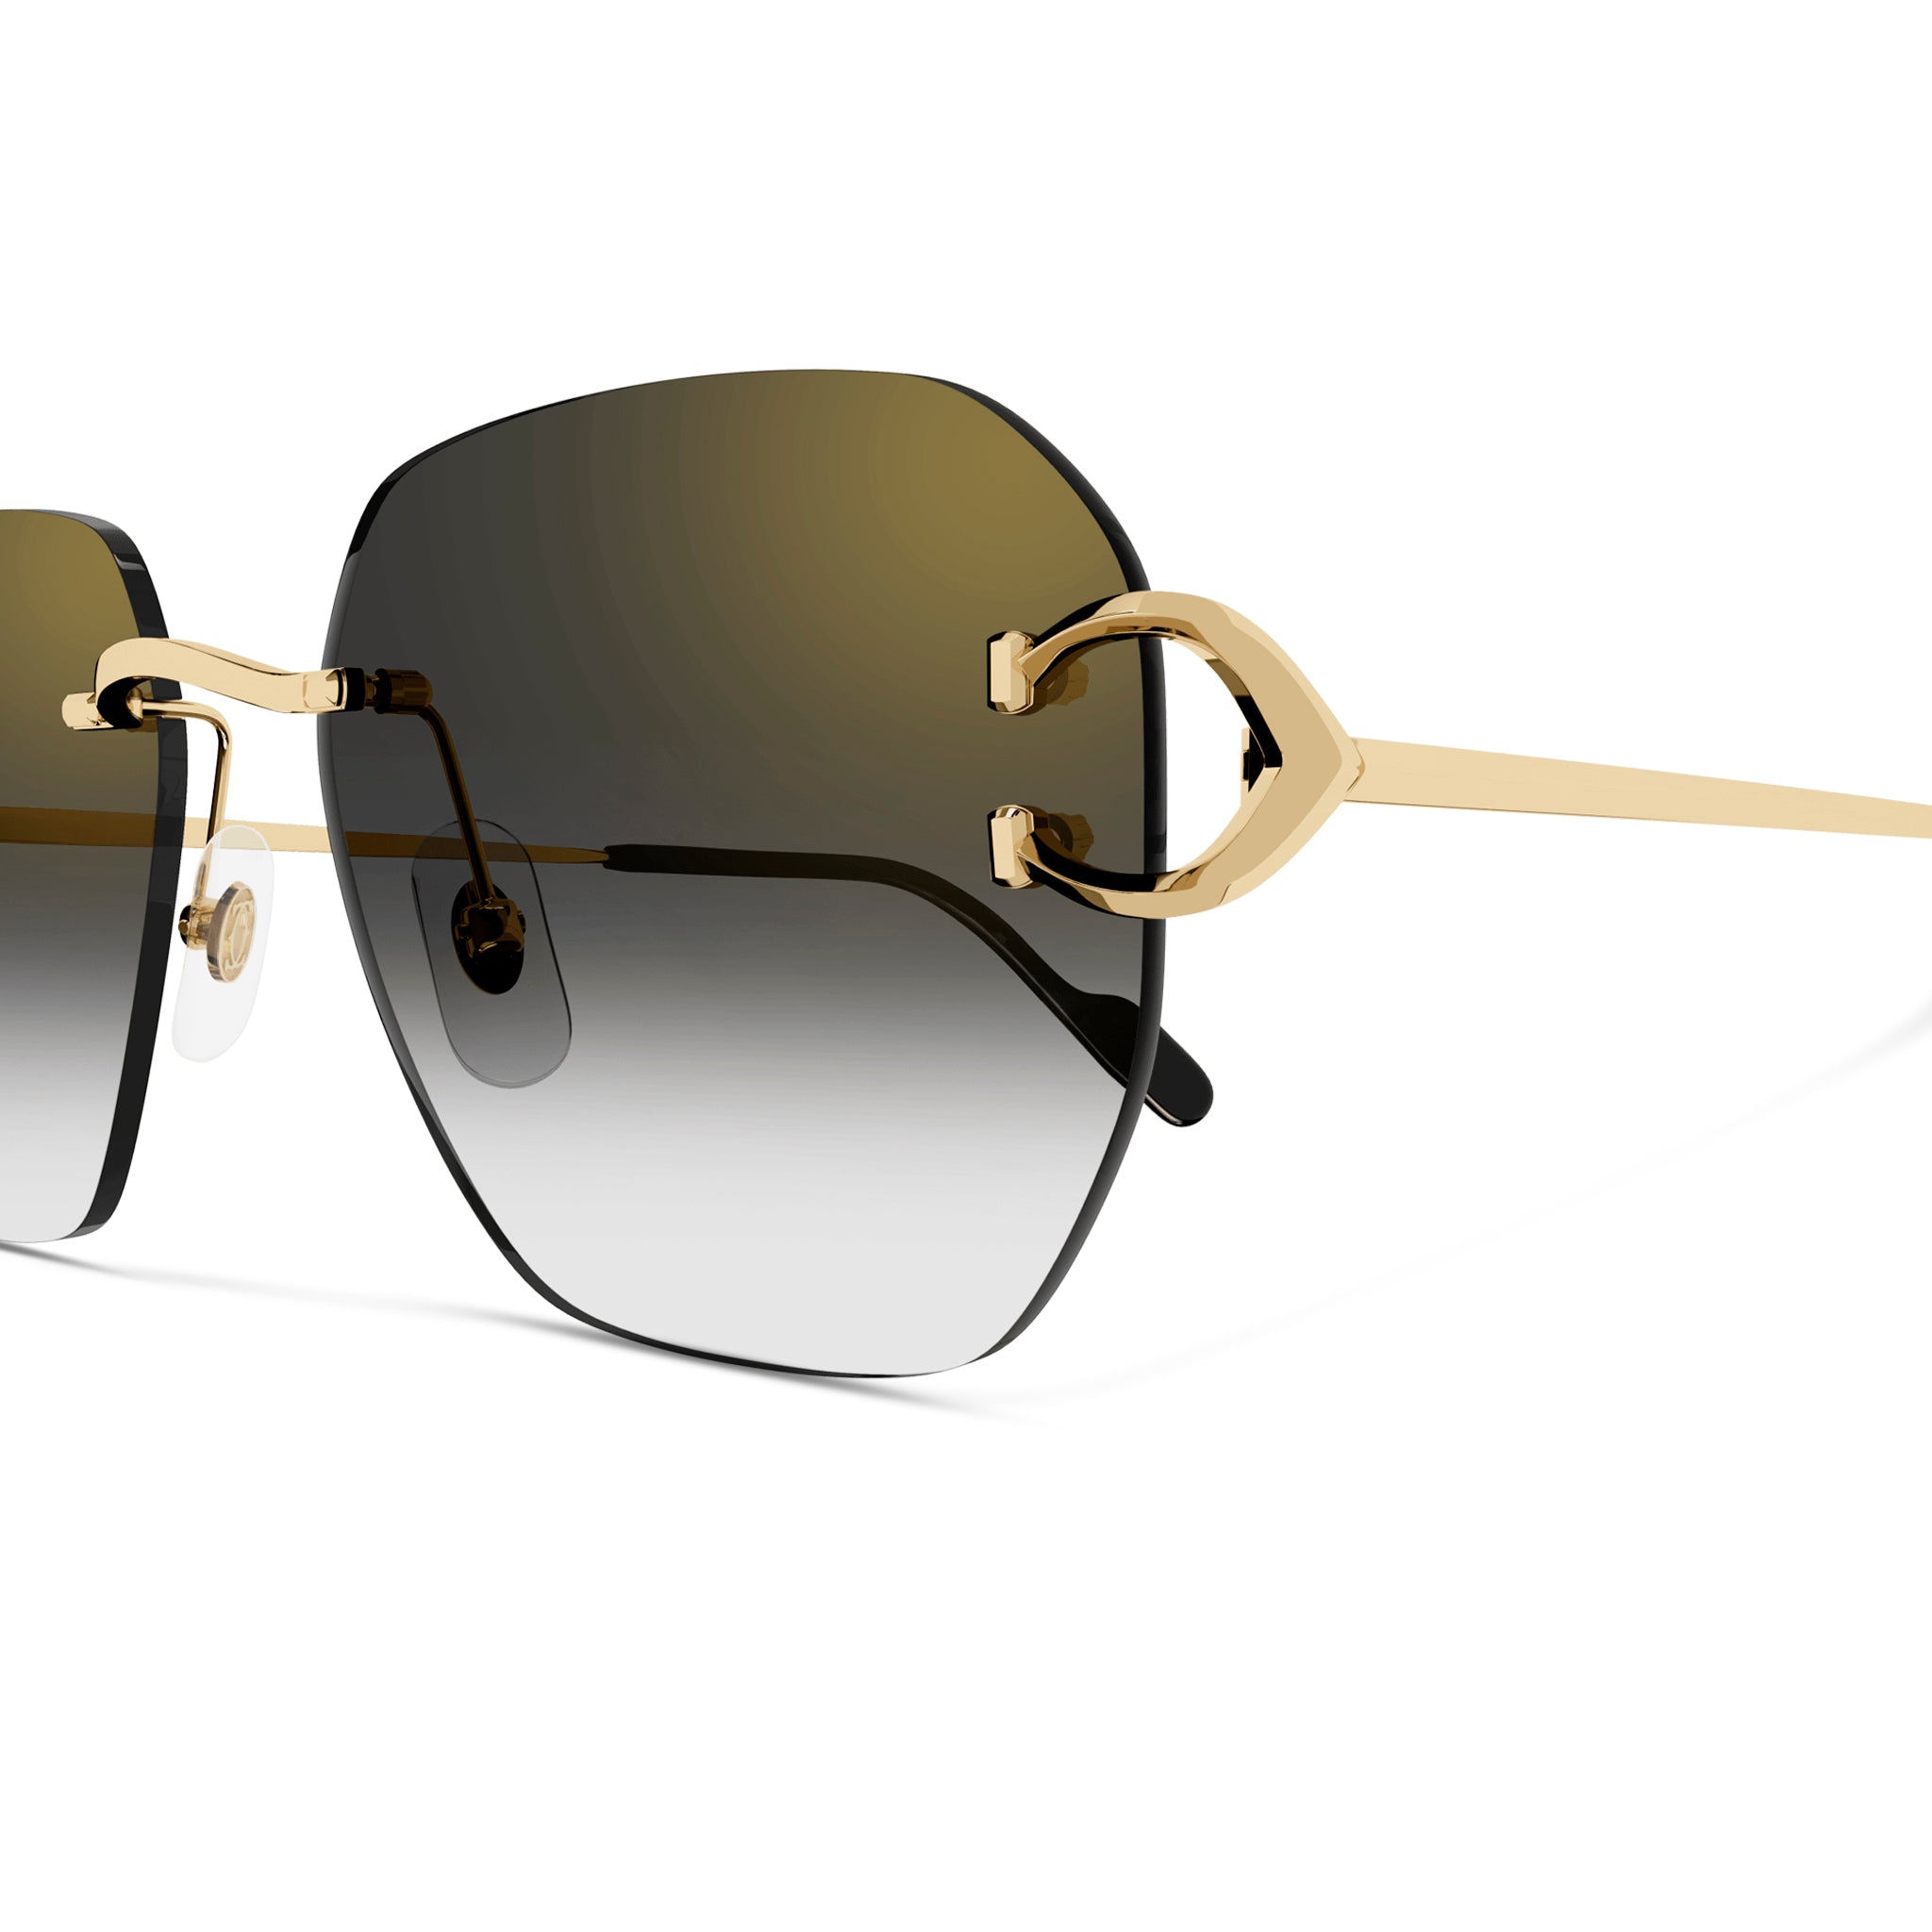 Close up view of Cartier Eyewear CT0394S-001 C Decor Gold Grey Rimless Sunglasses